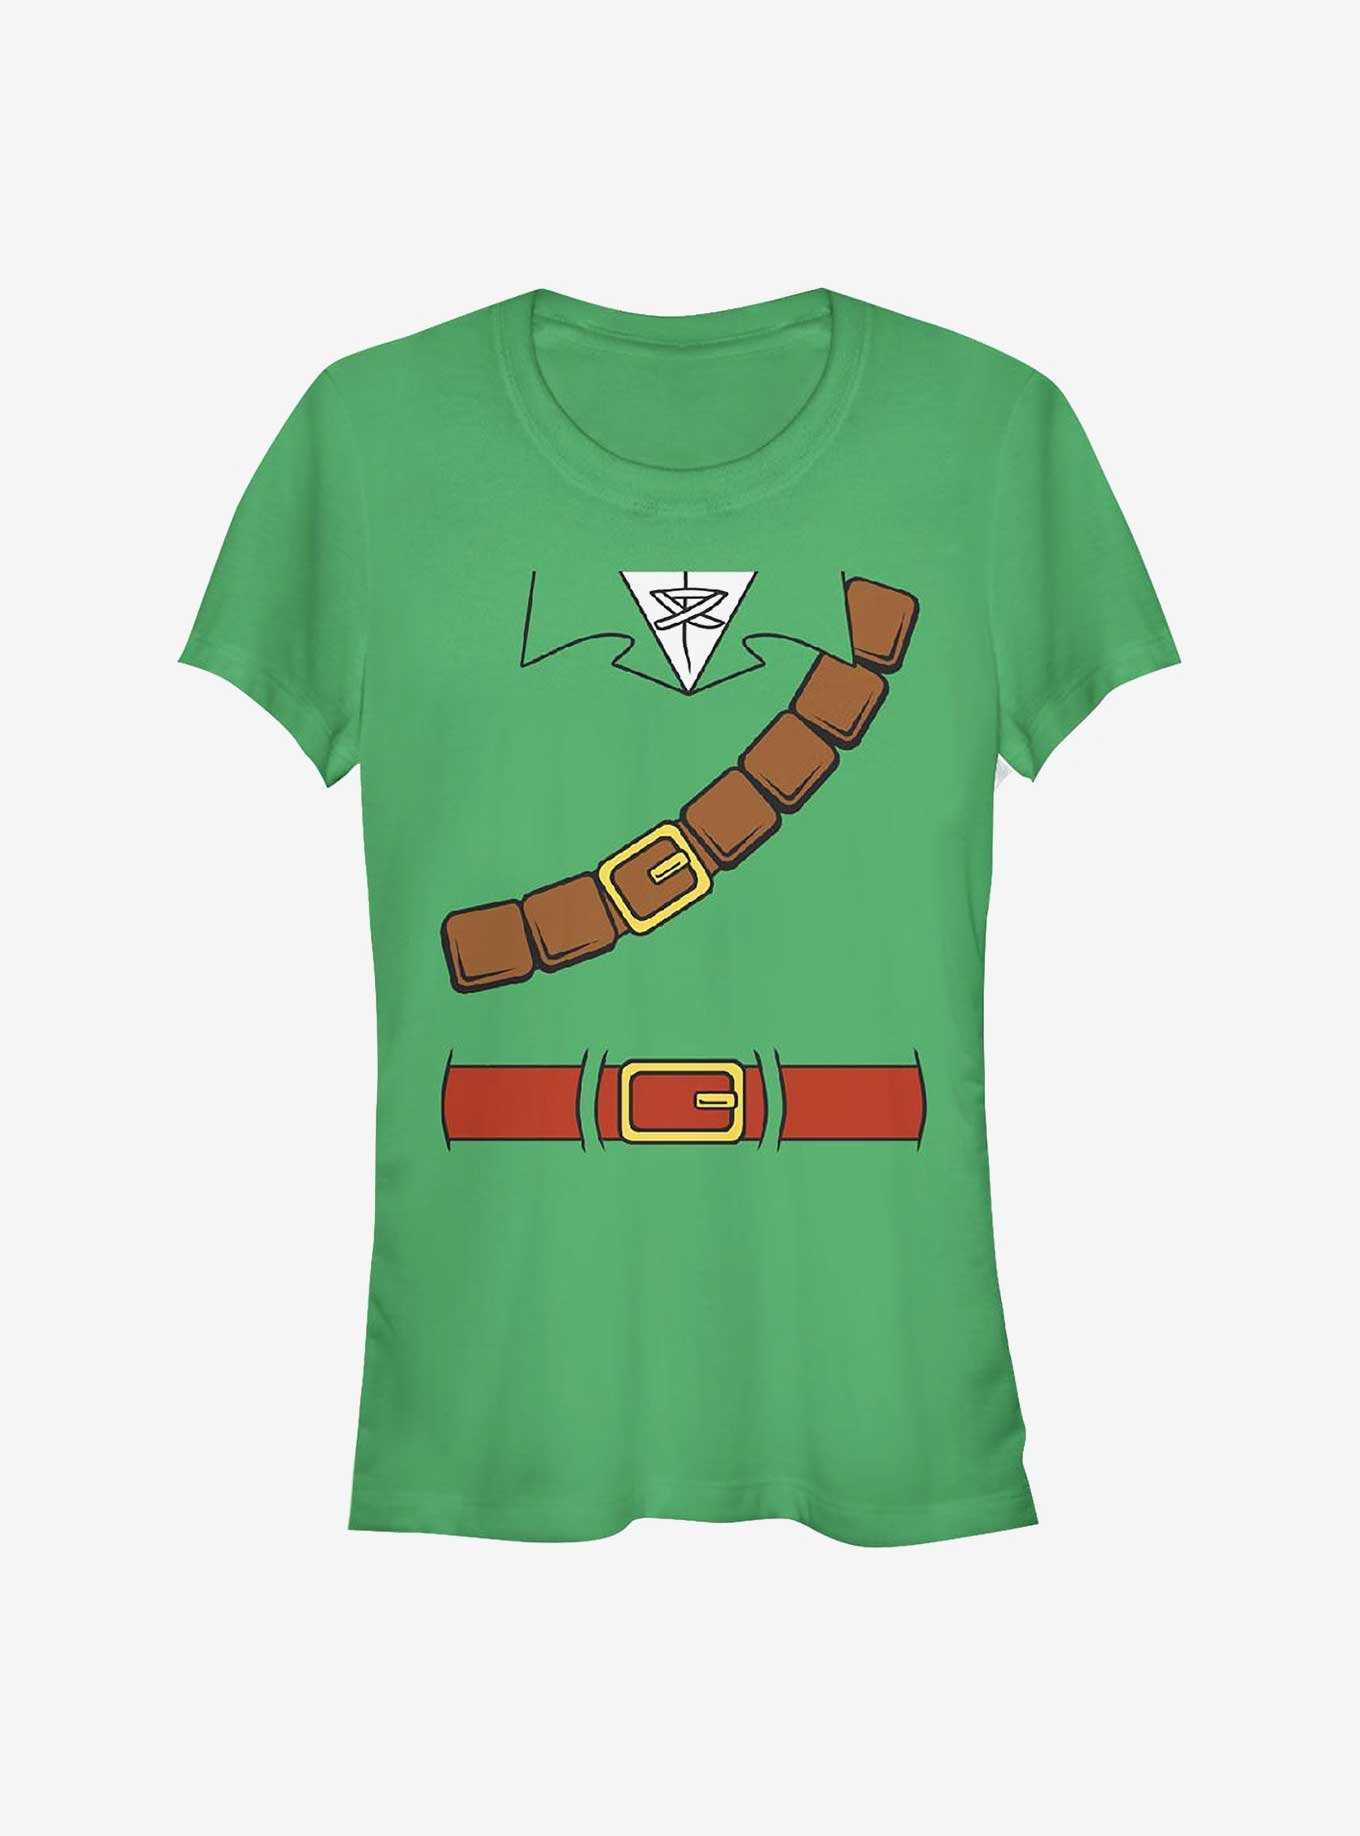 Nintendo Zelda Link Belt Girls T-Shirt, , hi-res